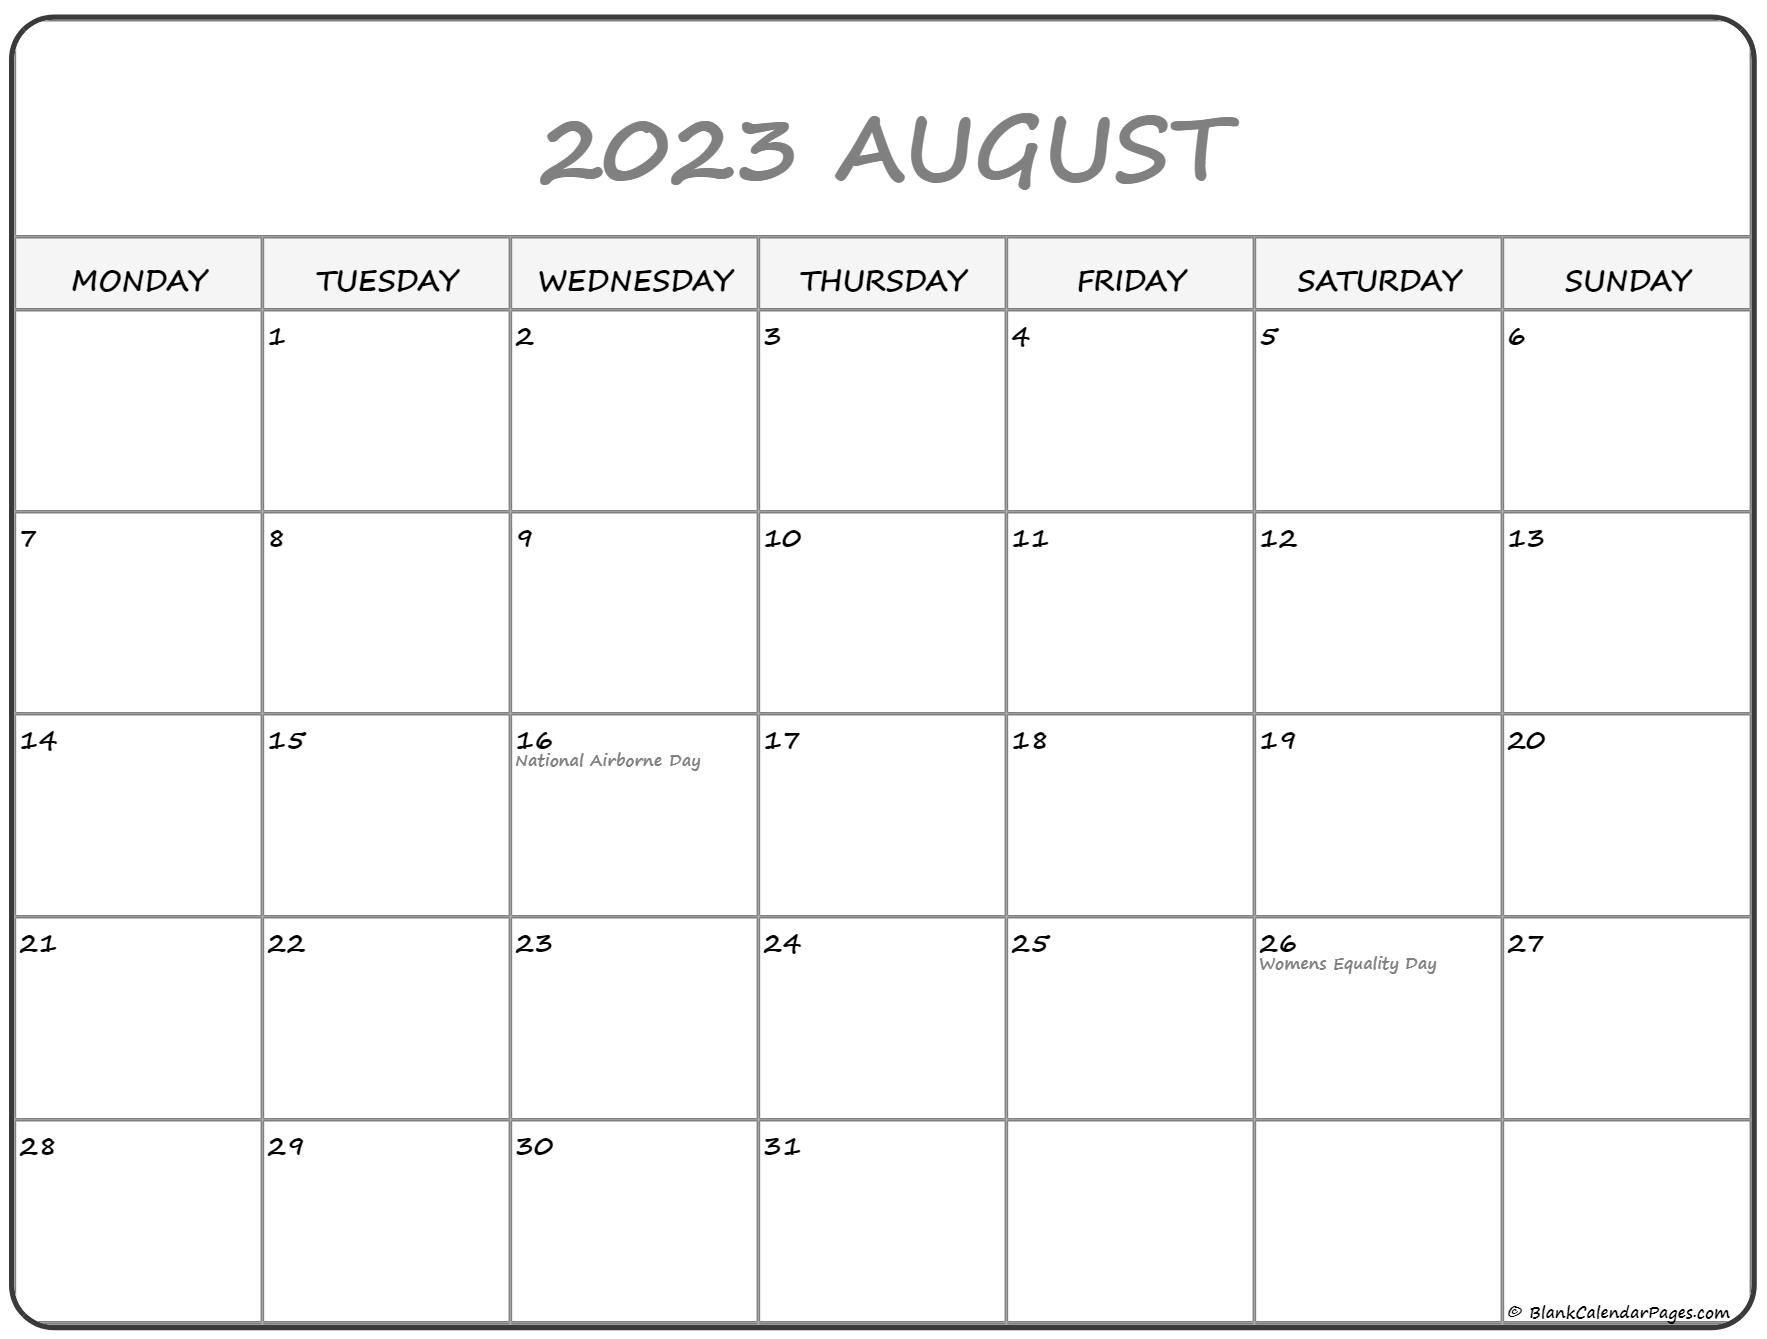 August 2023 Monday Calendar | Monday to Sunday